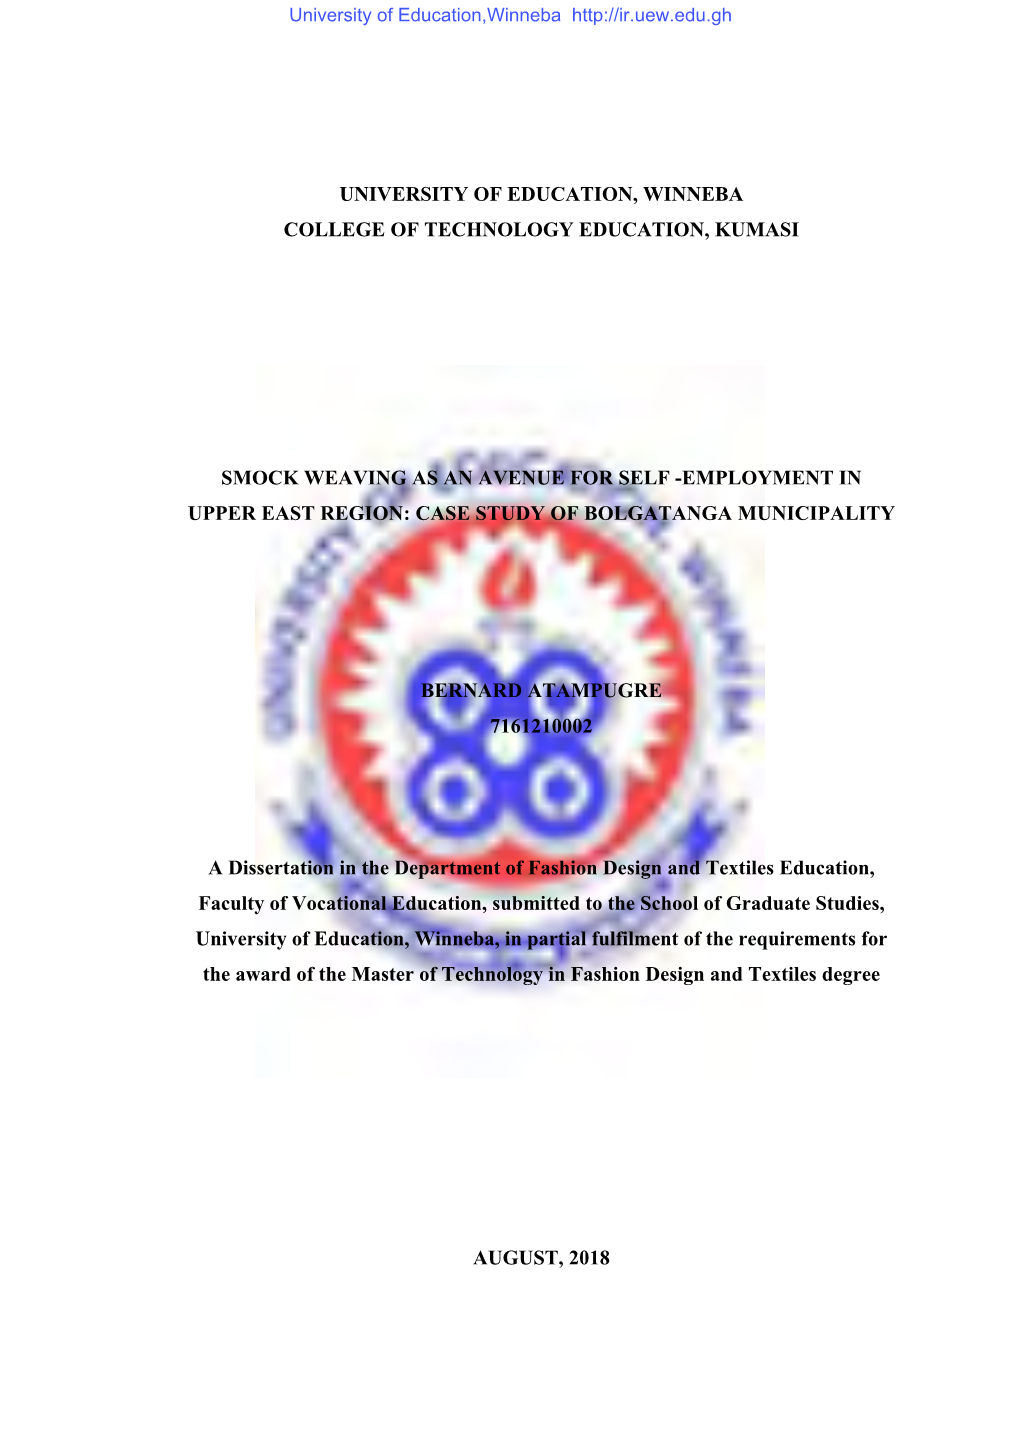 Title Page UNIVERSITY of EDUCATION, WINNEBA COLLEGE